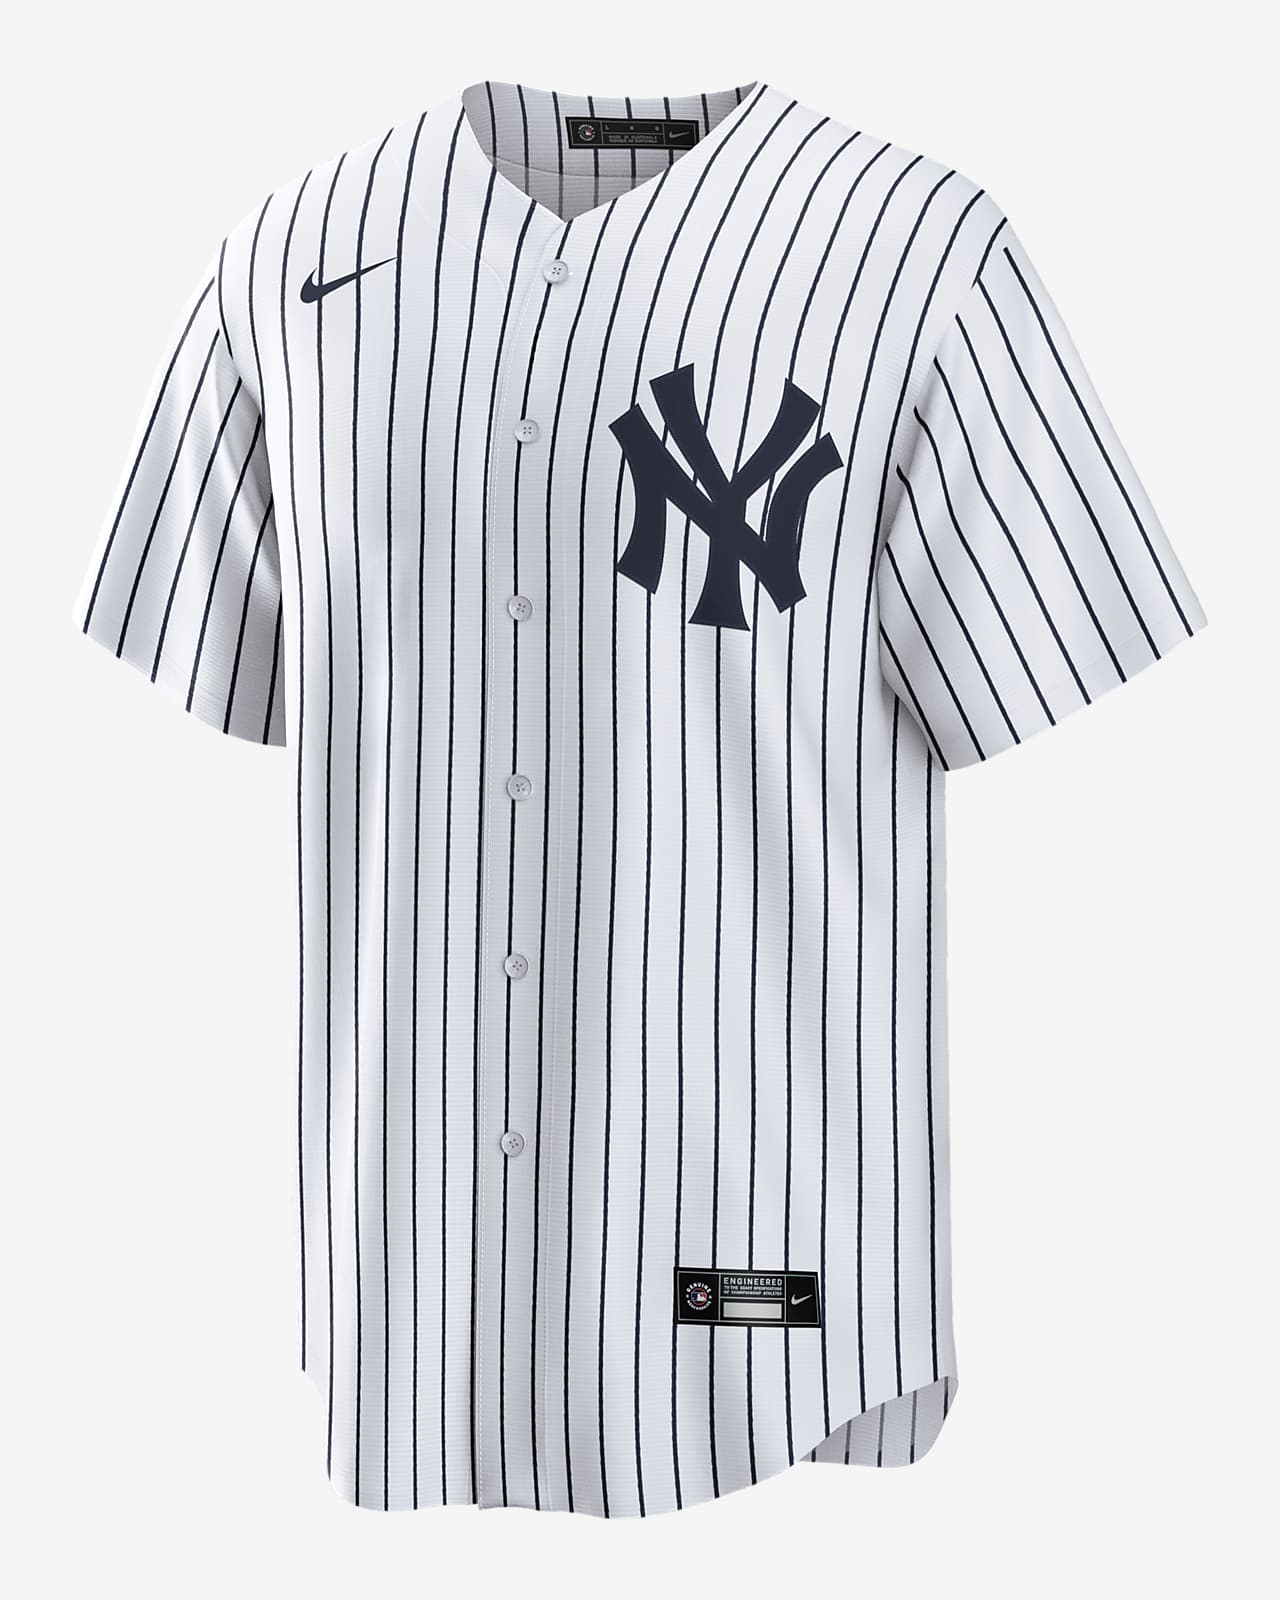 baseball new york jersey